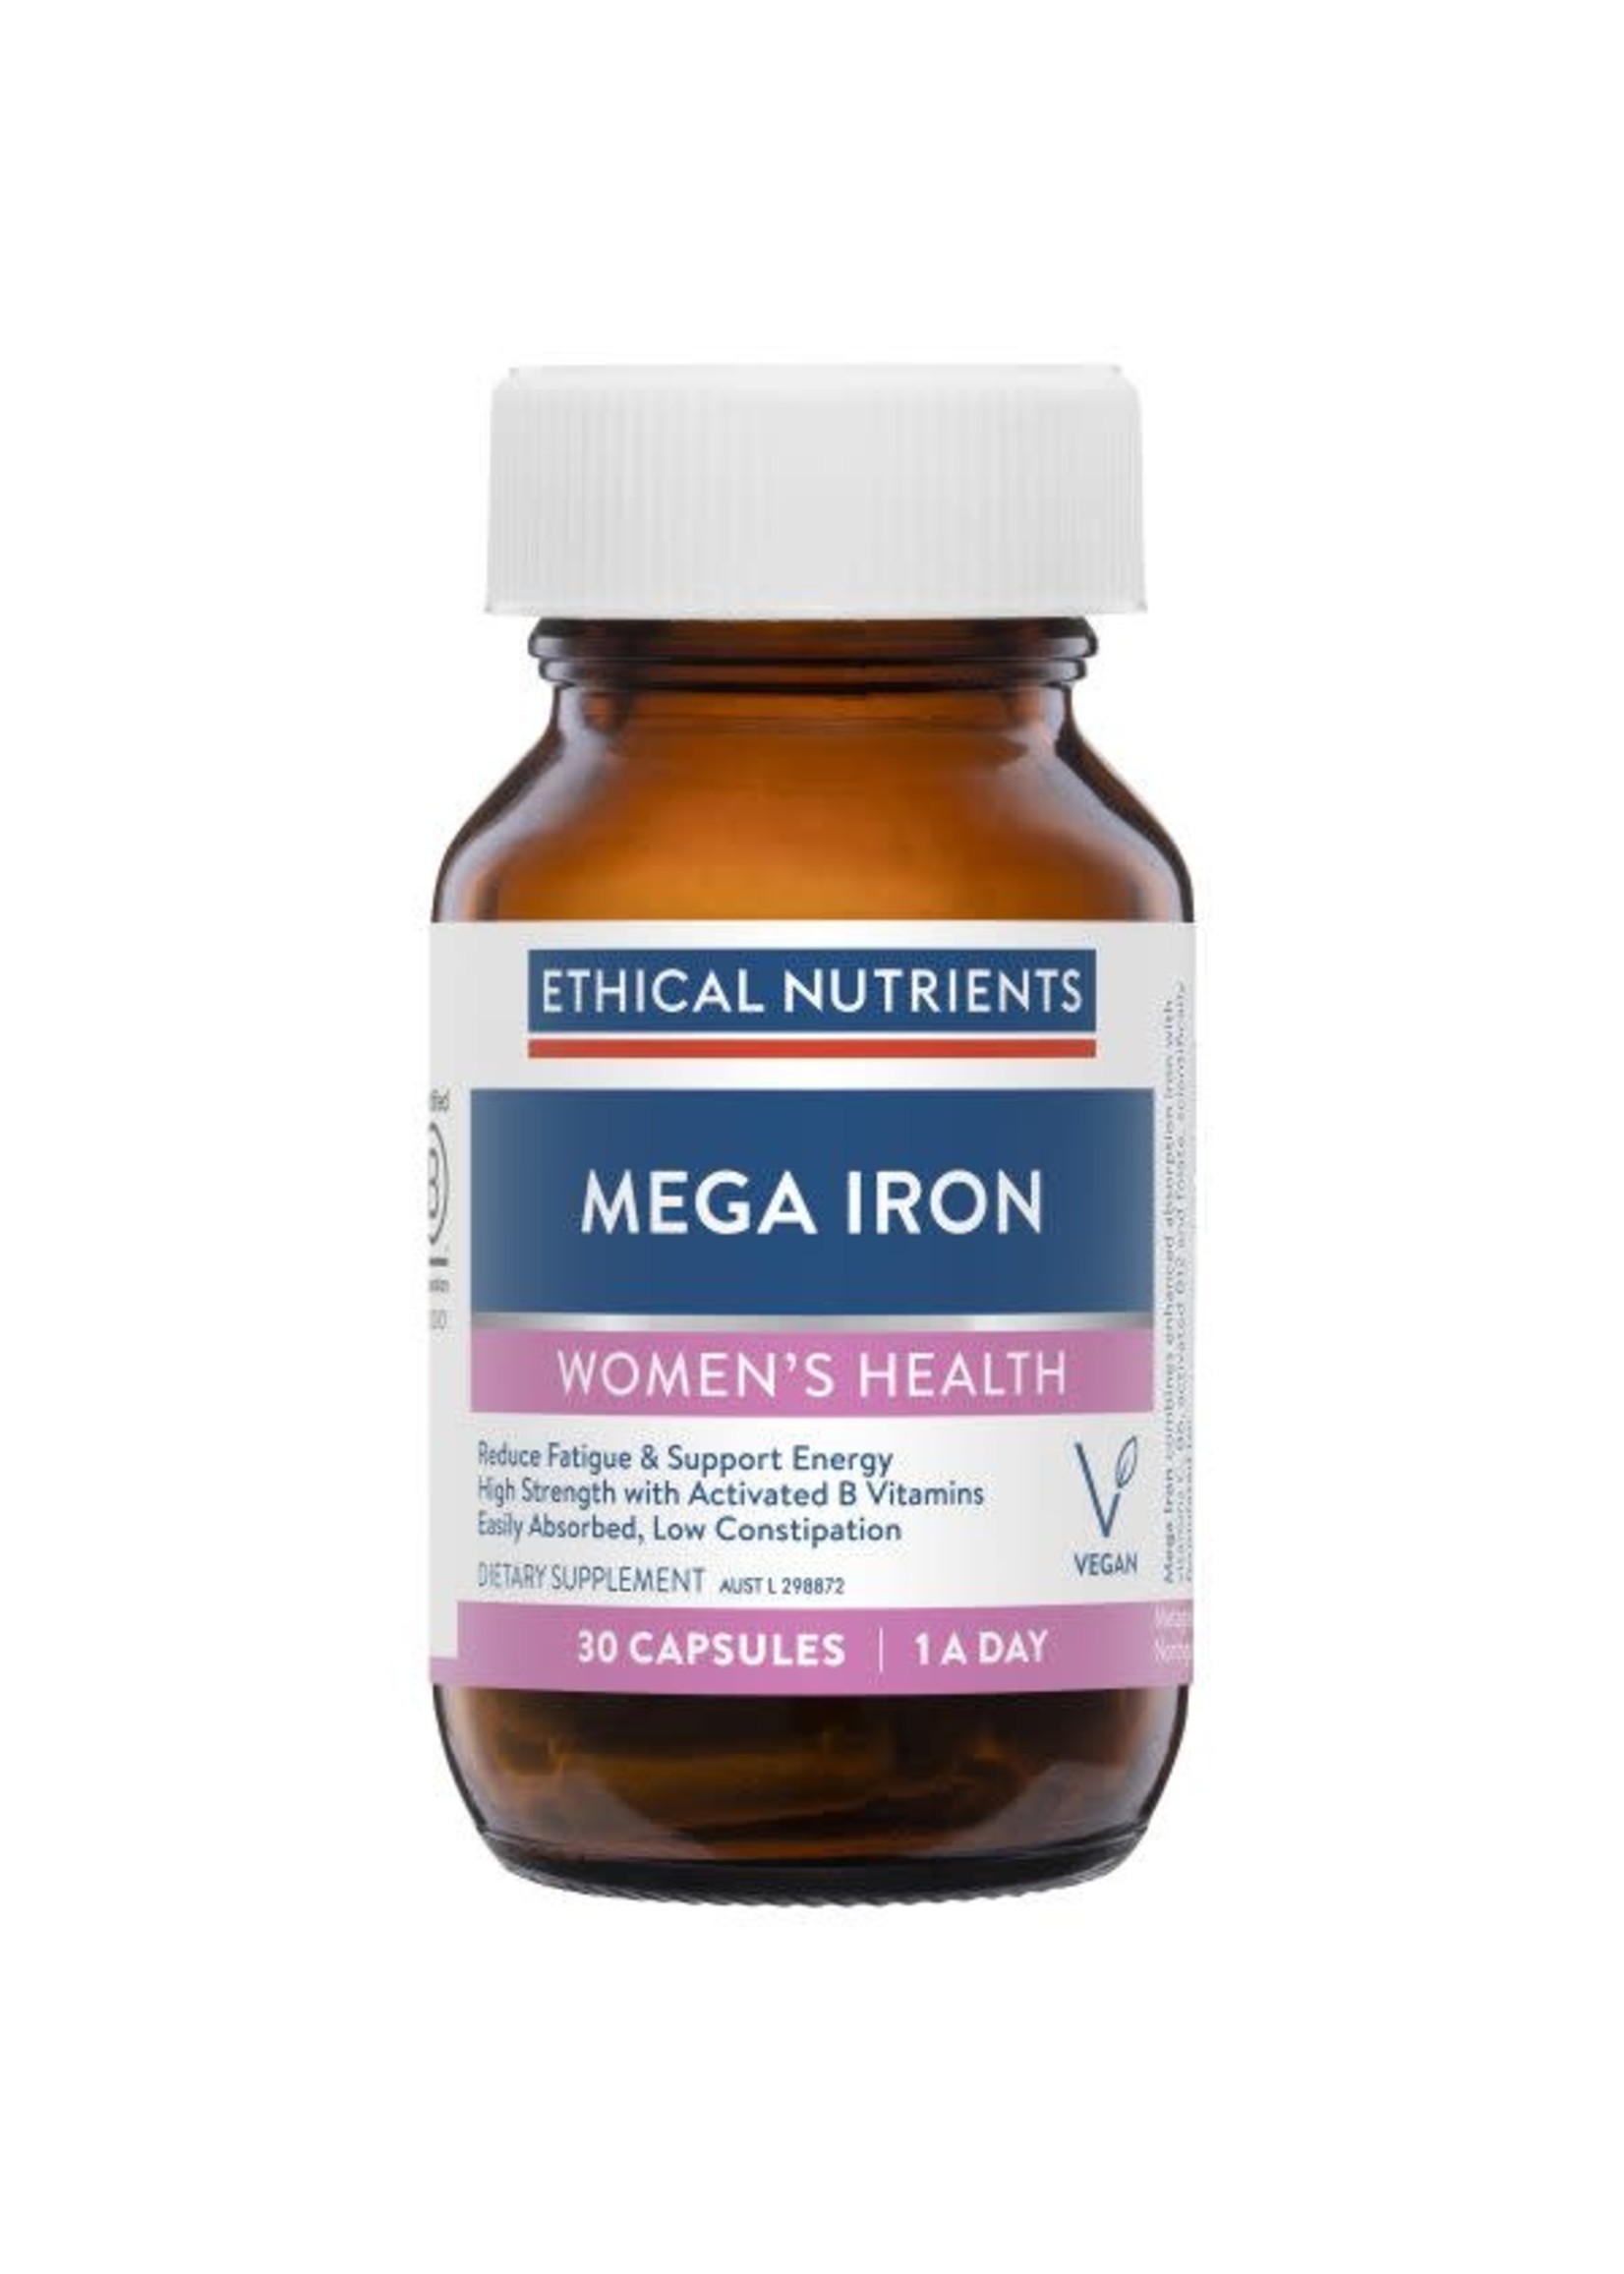 ETHICAL NUTRIENTS Ethical Nutrients Mega Iron 30 caps